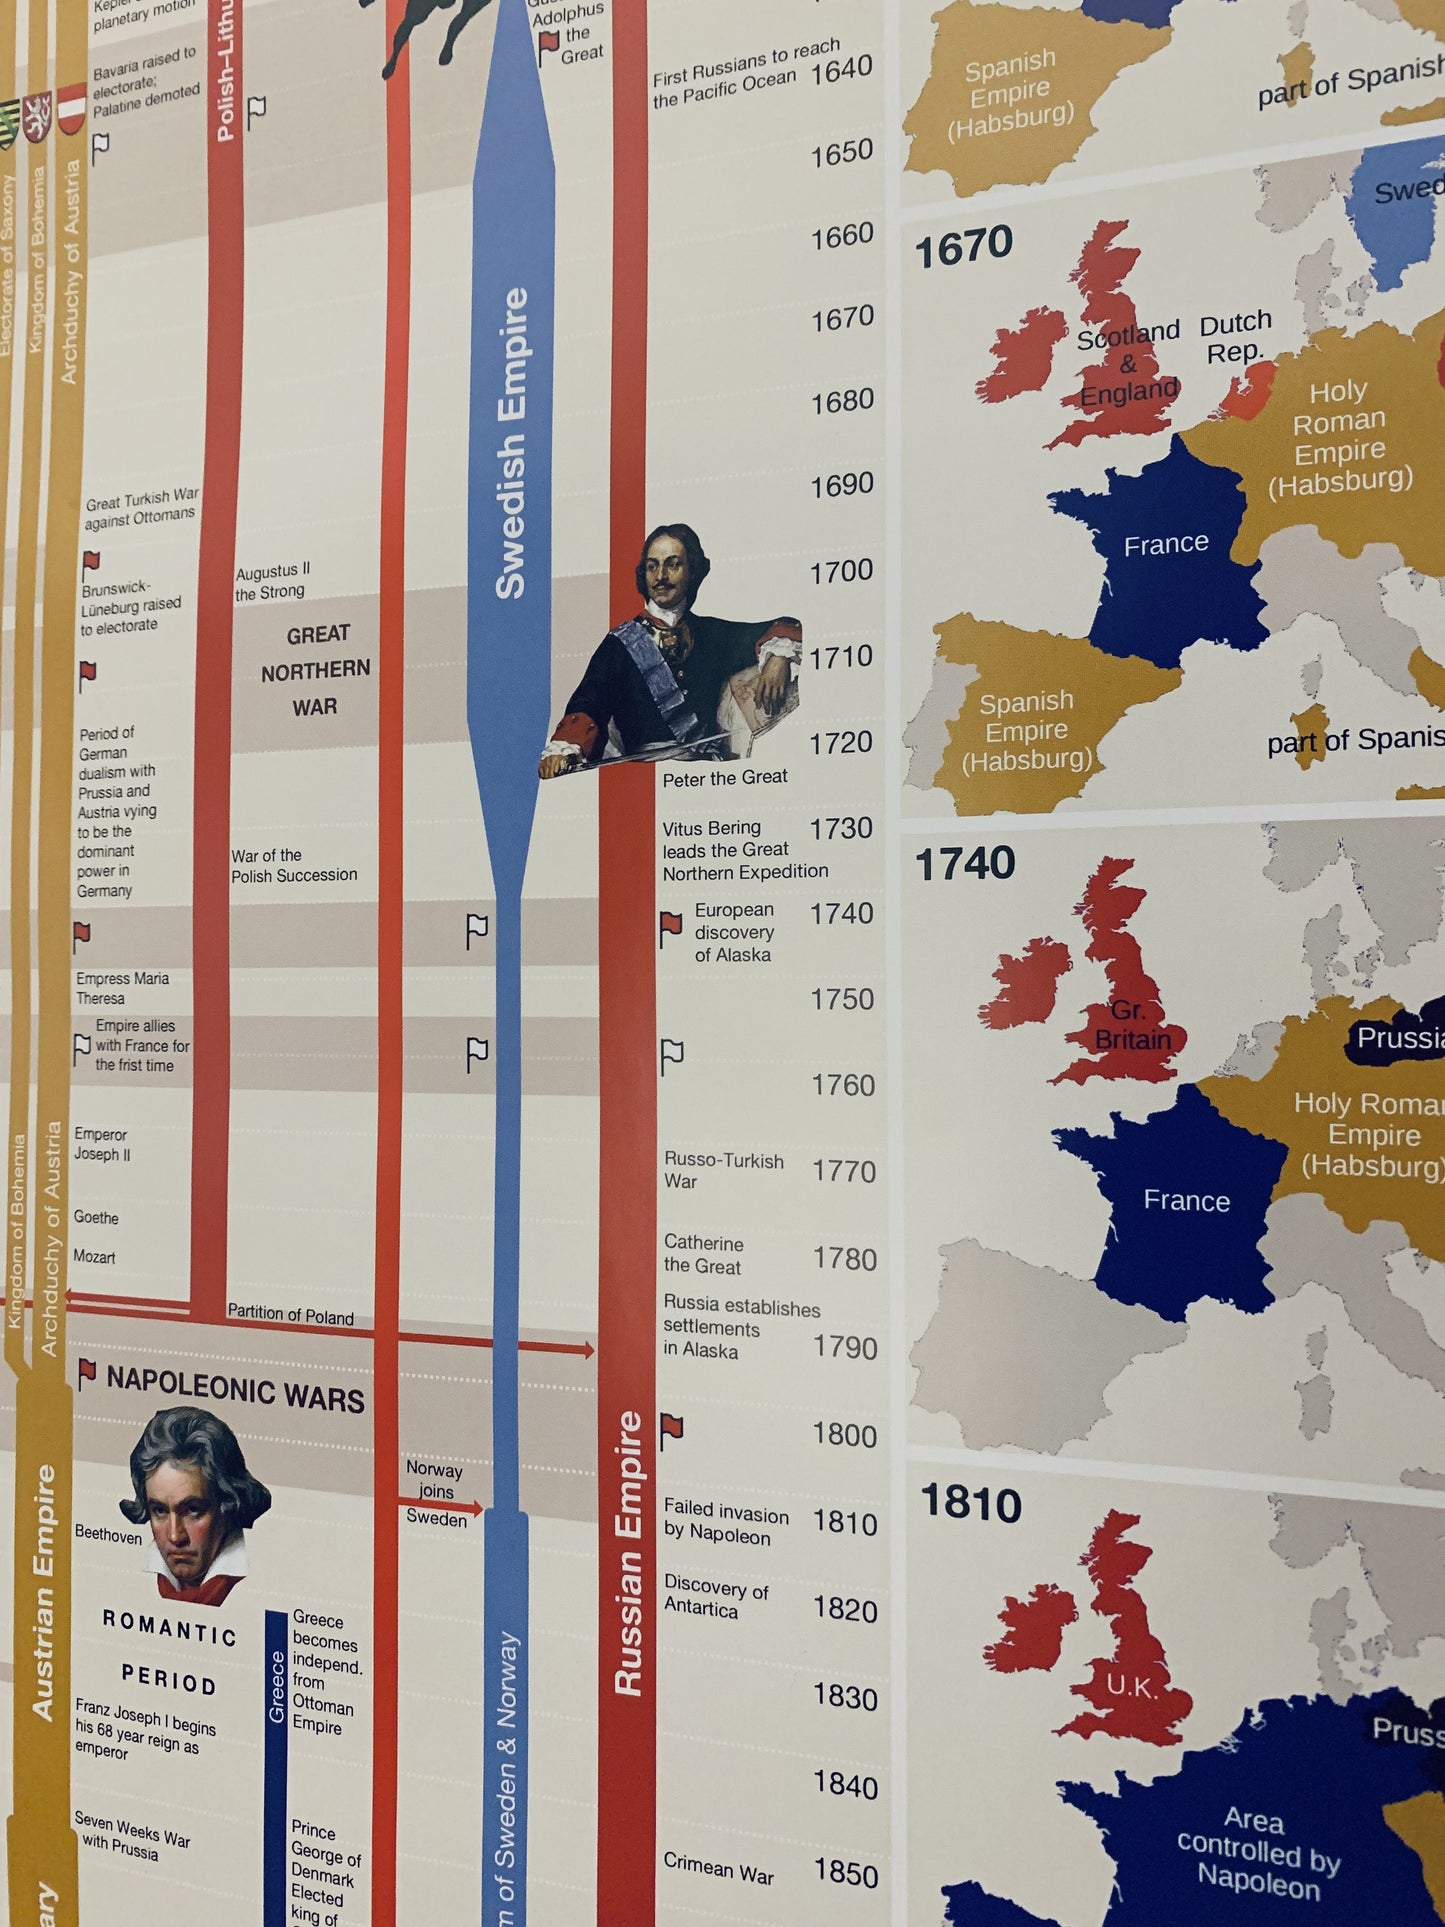 Timeline of European History